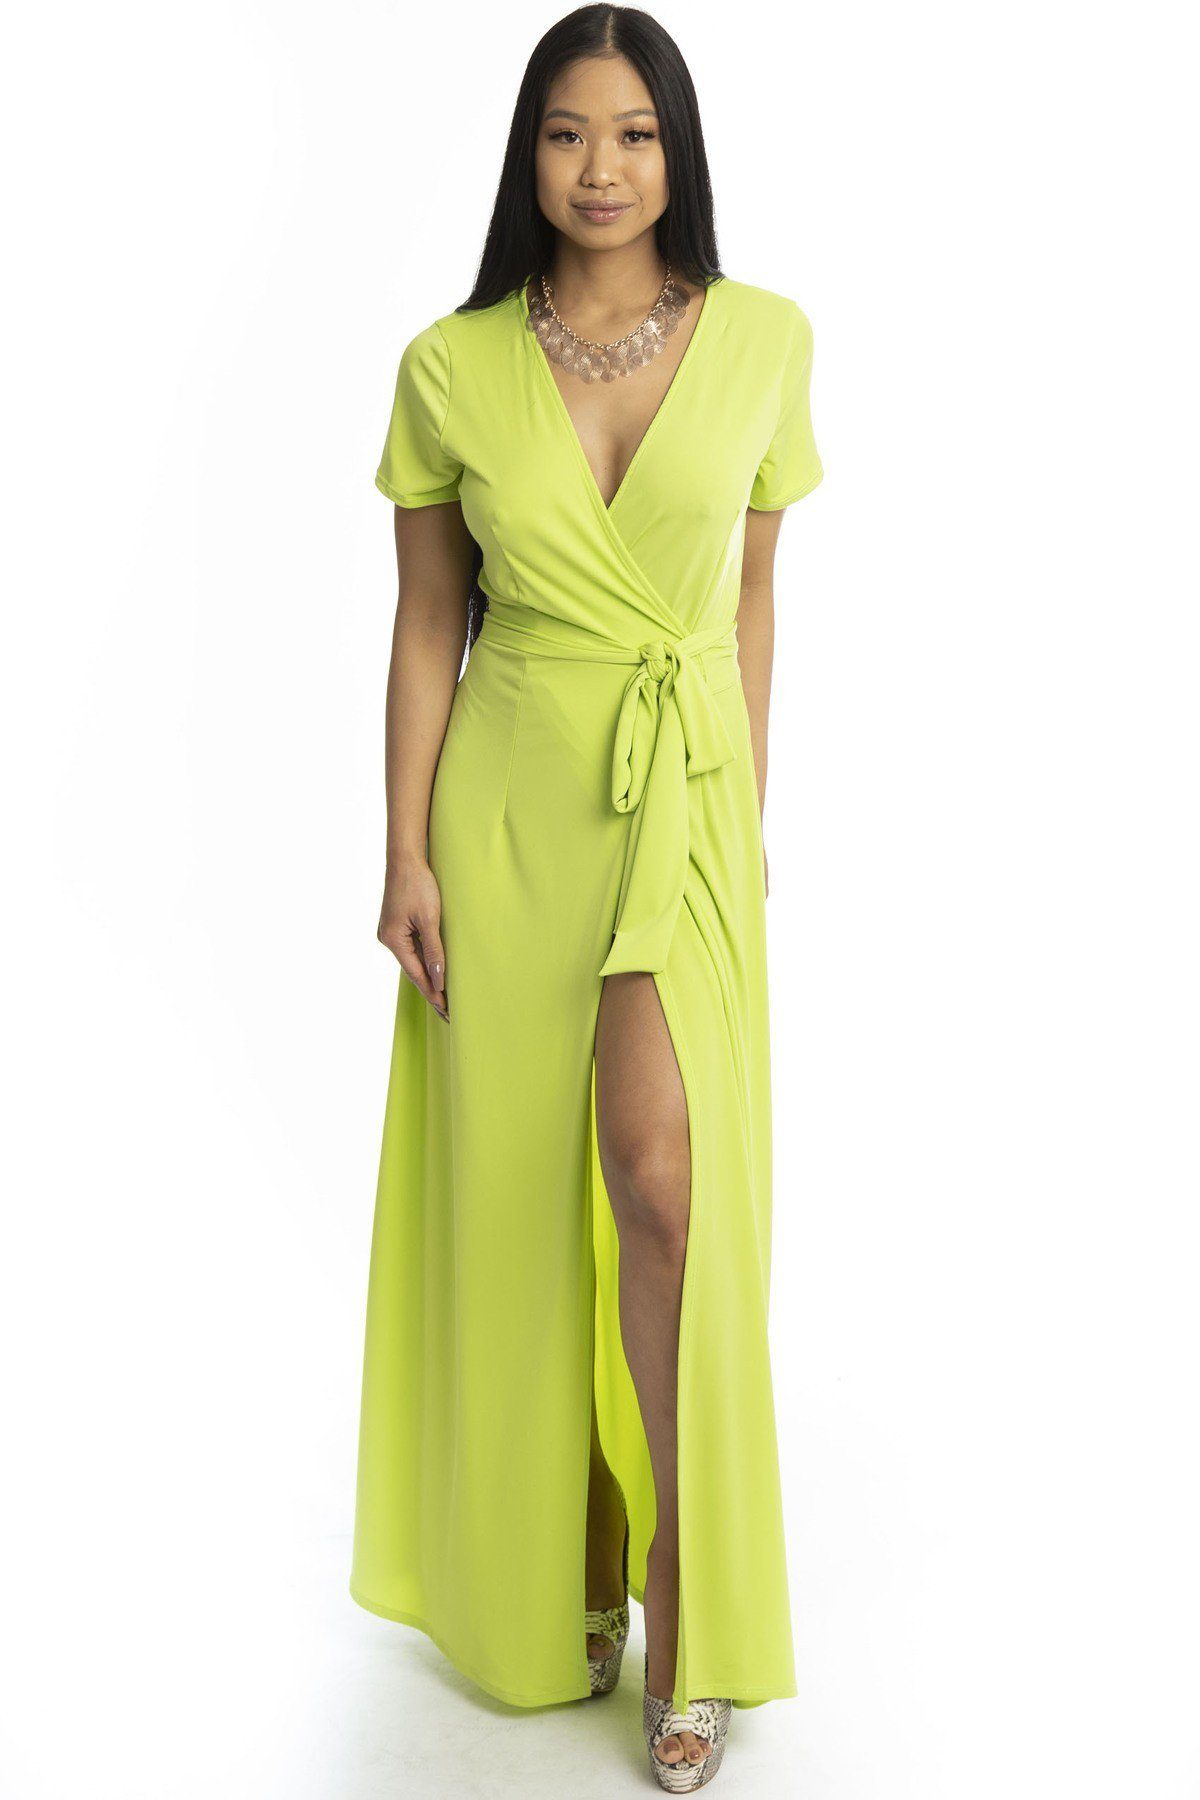 Lime Green Wrap Dress - The Ocean Vibe